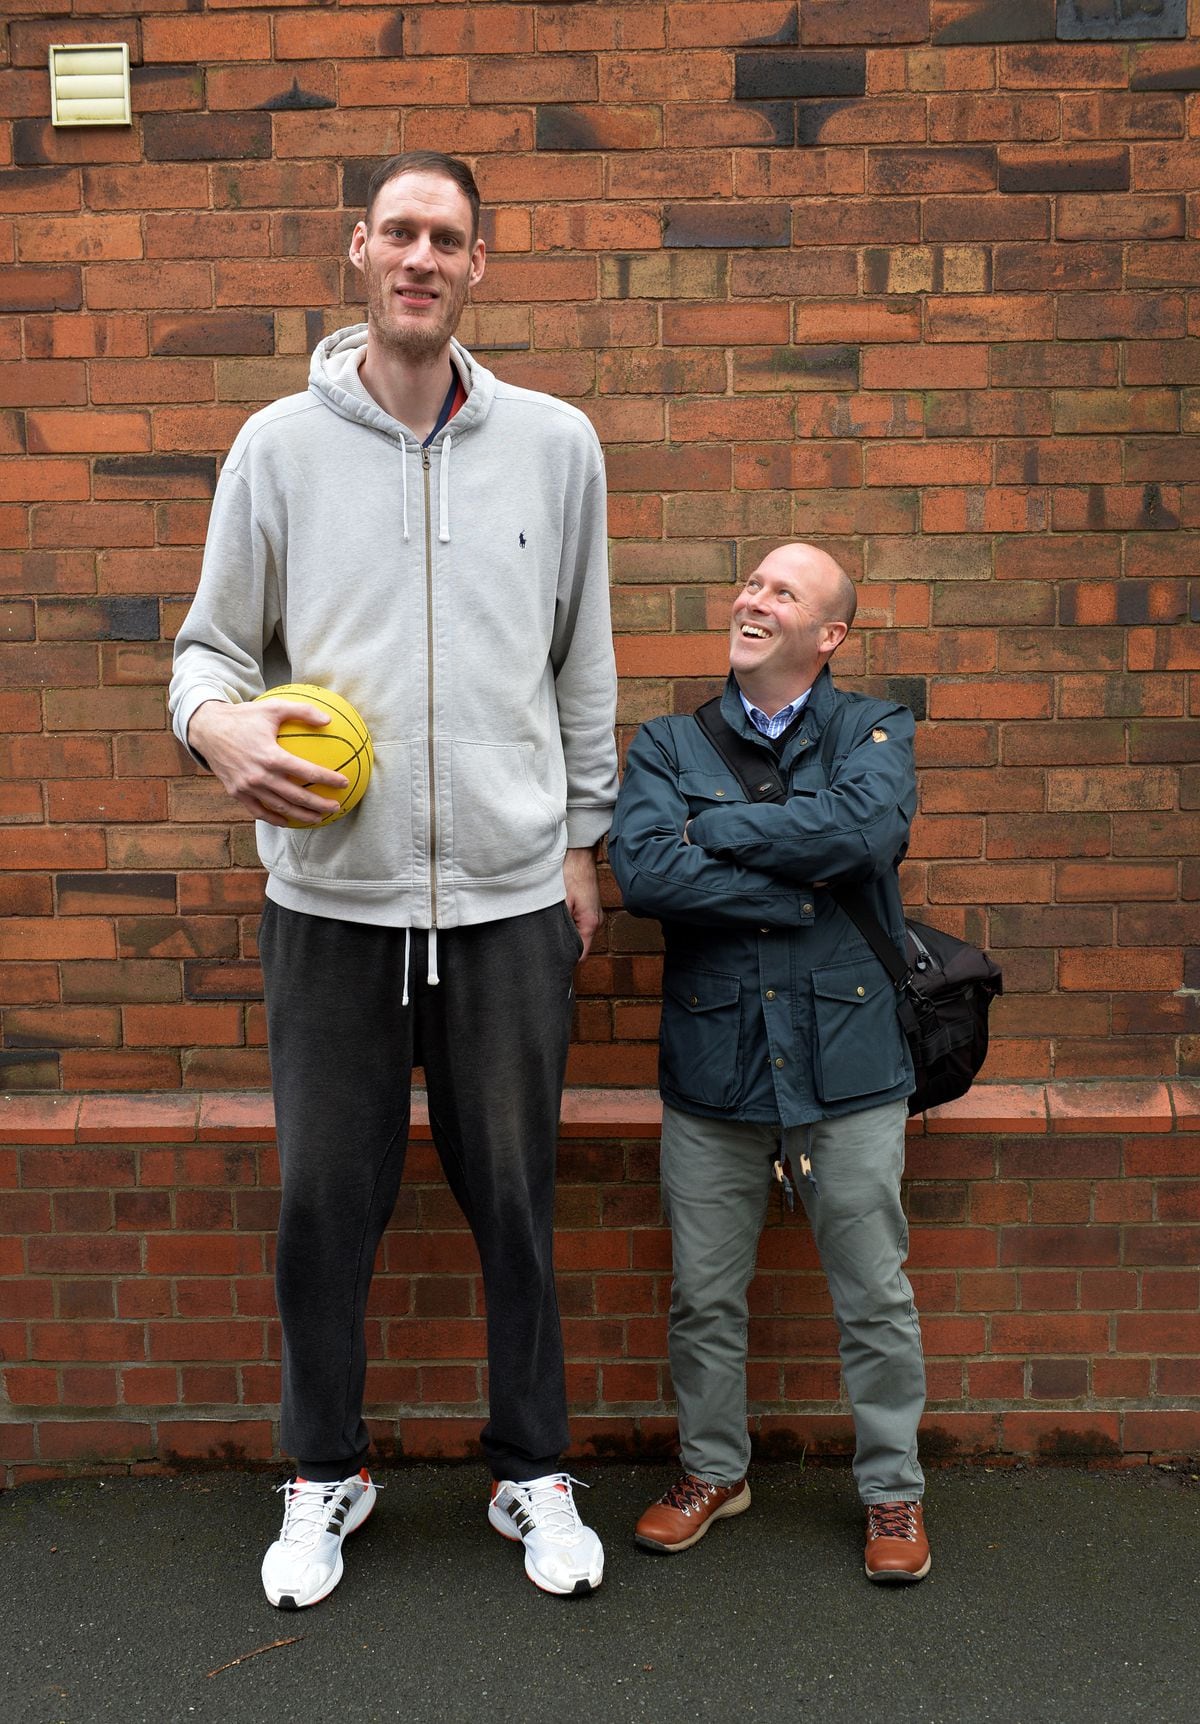 Britain's tallest man drops in on Shropshire schoolchildren with